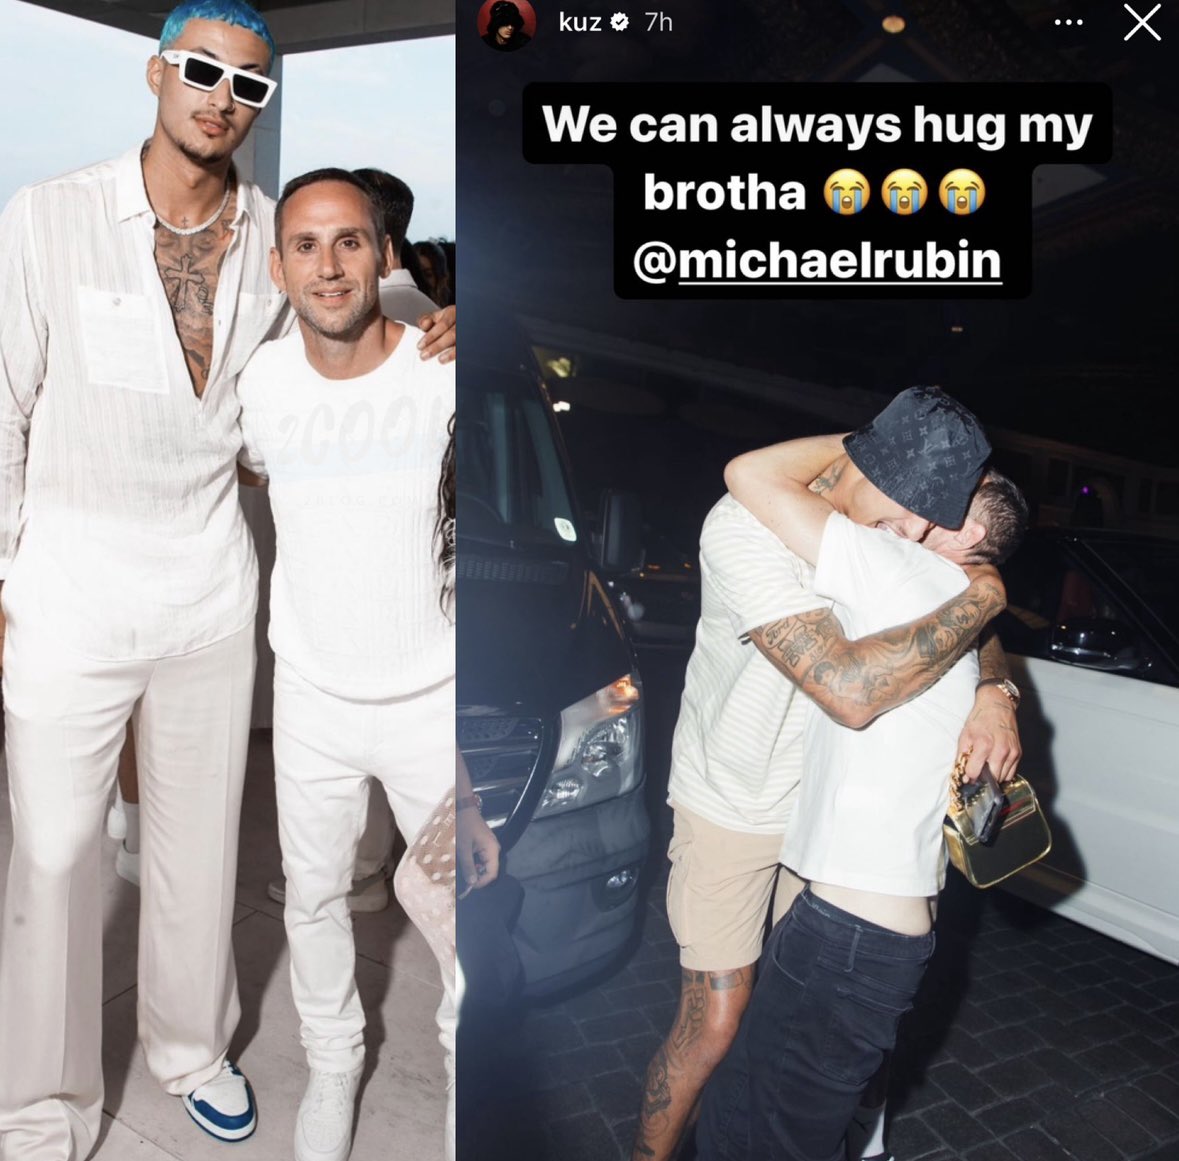 RT @2Cool2Blog: Kyle Kuzma speaks on Michael Rubin’s party hugs https://t.co/dhIwfWAc4a